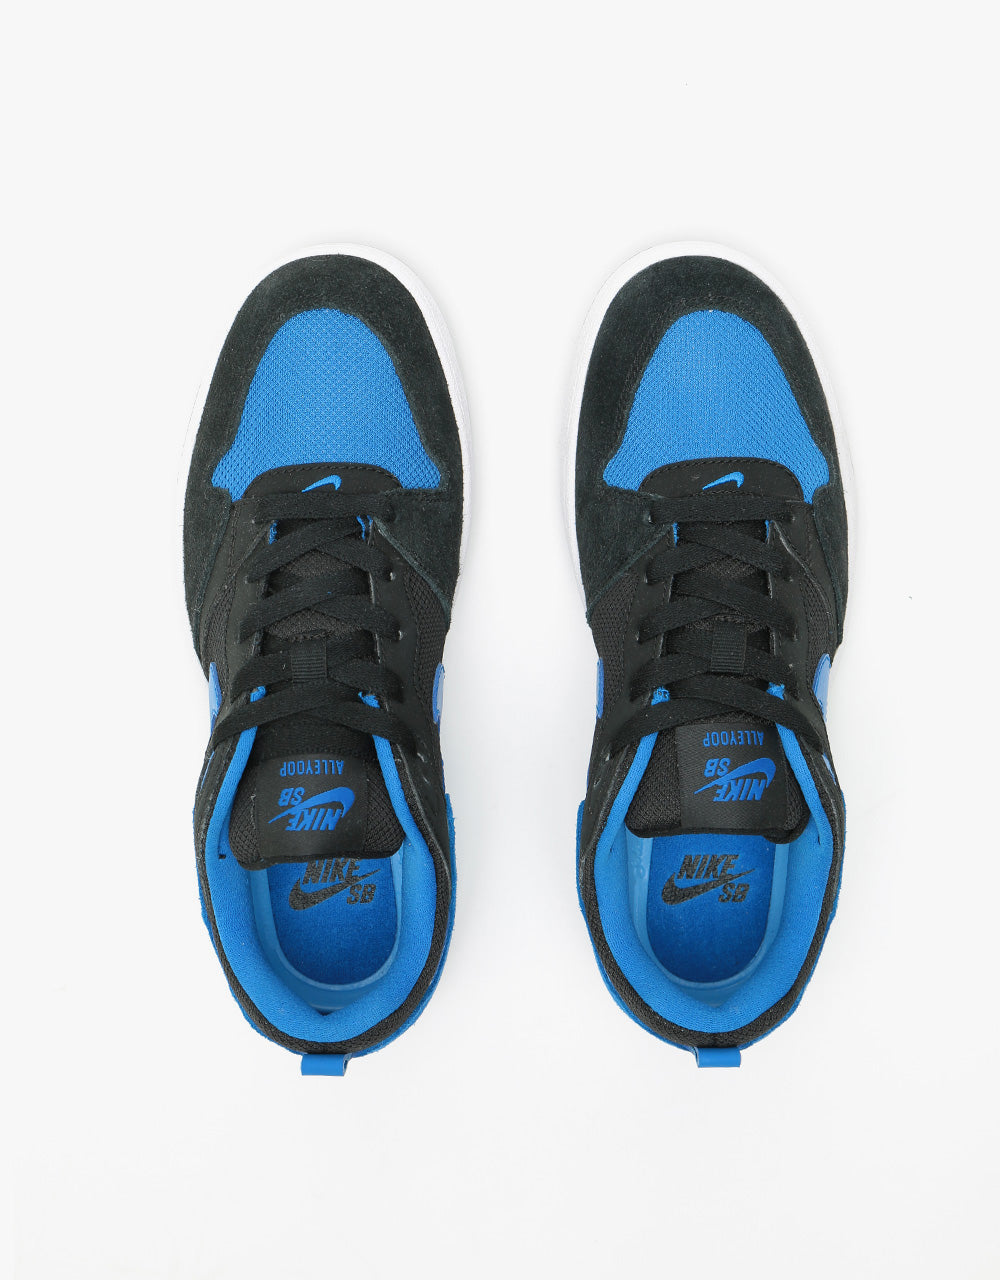 Nike SB Alleyoop Kids Skate Shoes - Black/Royal Blue/Black